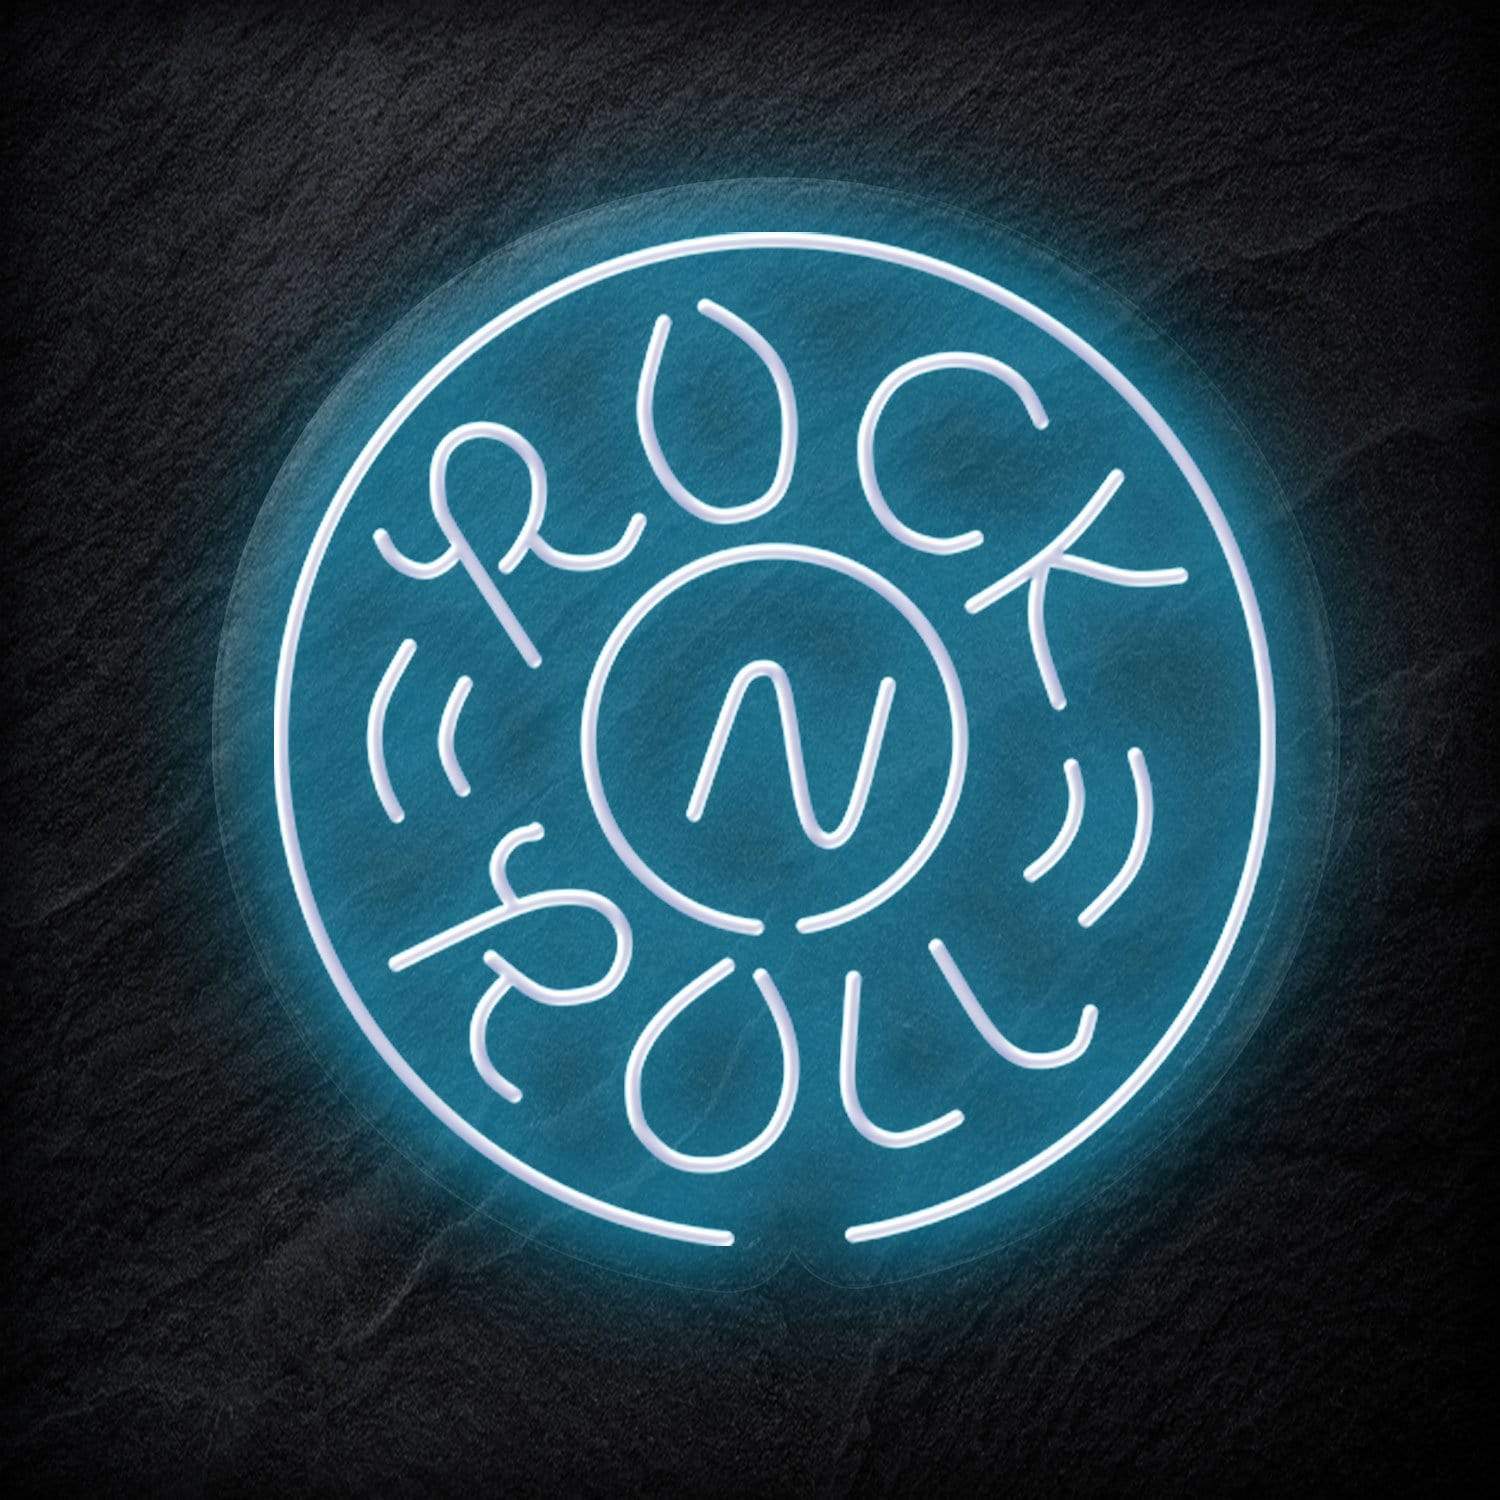 "Rockn Roll Musik" LED Neon Schild - NEONEVERGLOW